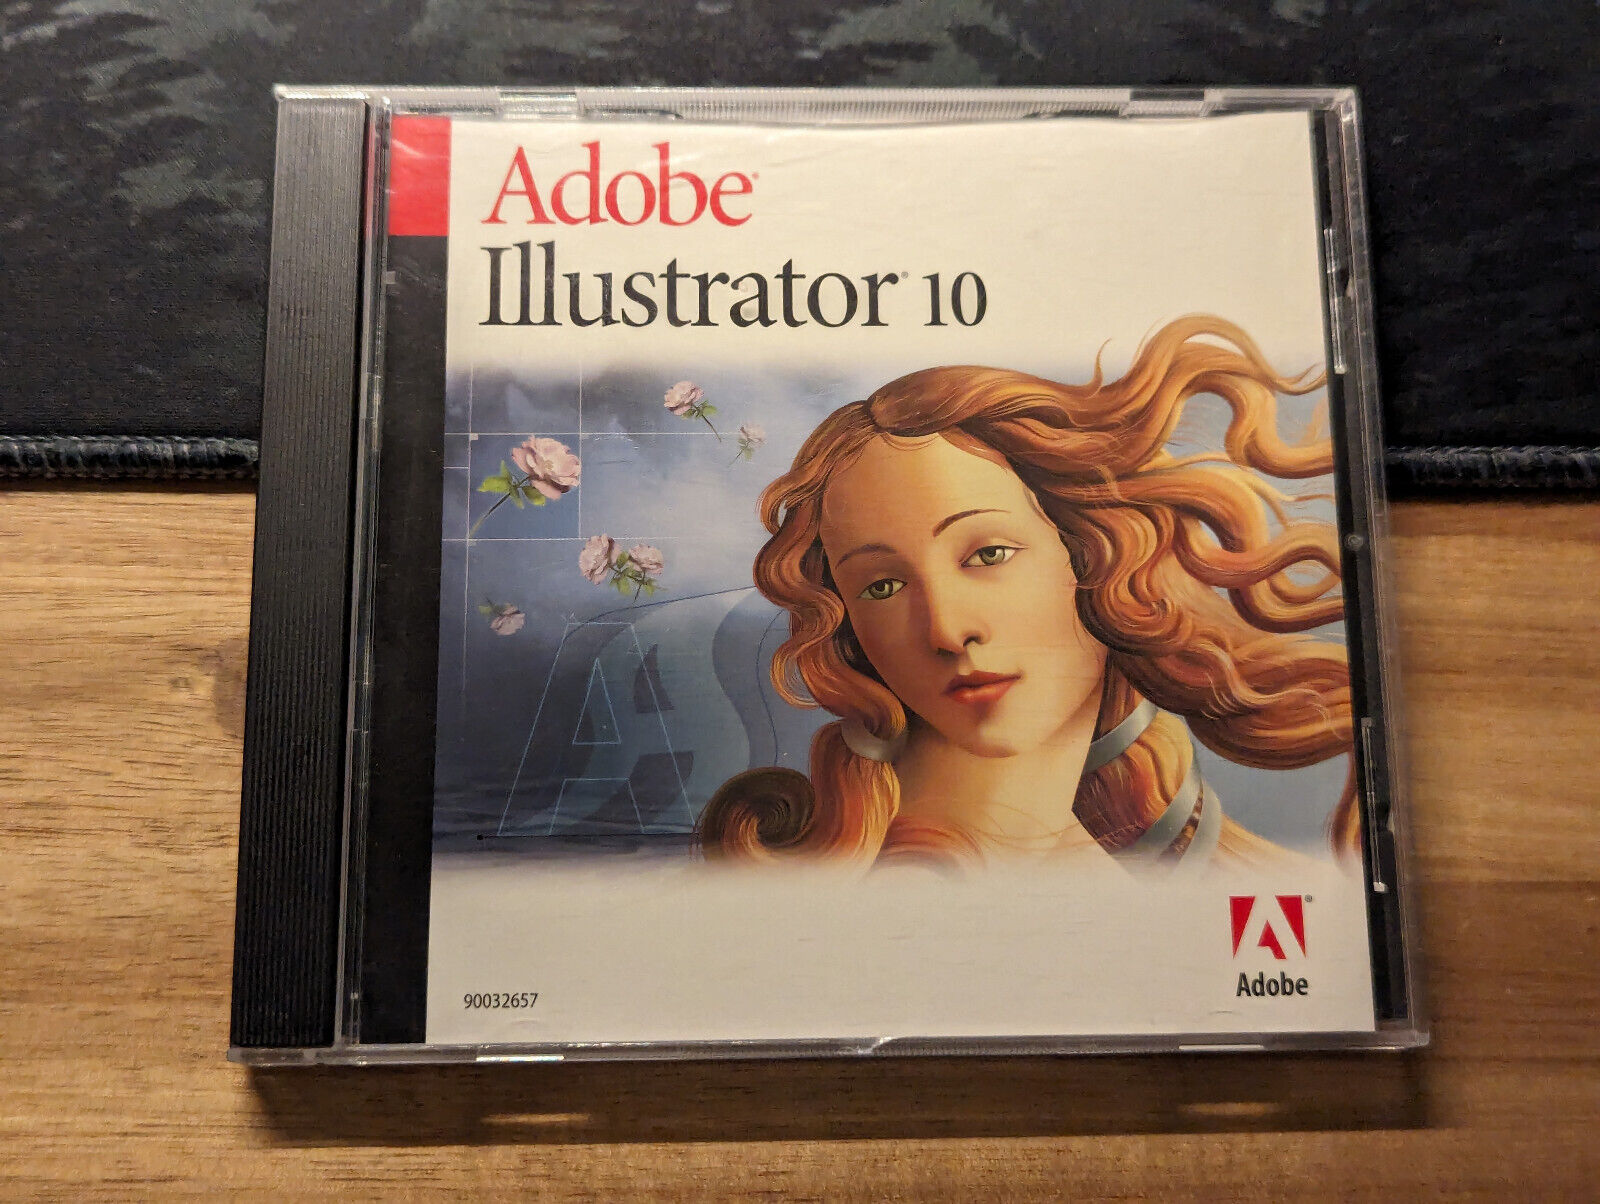 Adobe Illustrator 10 Mac Upgrade with Serial Number Macintosh